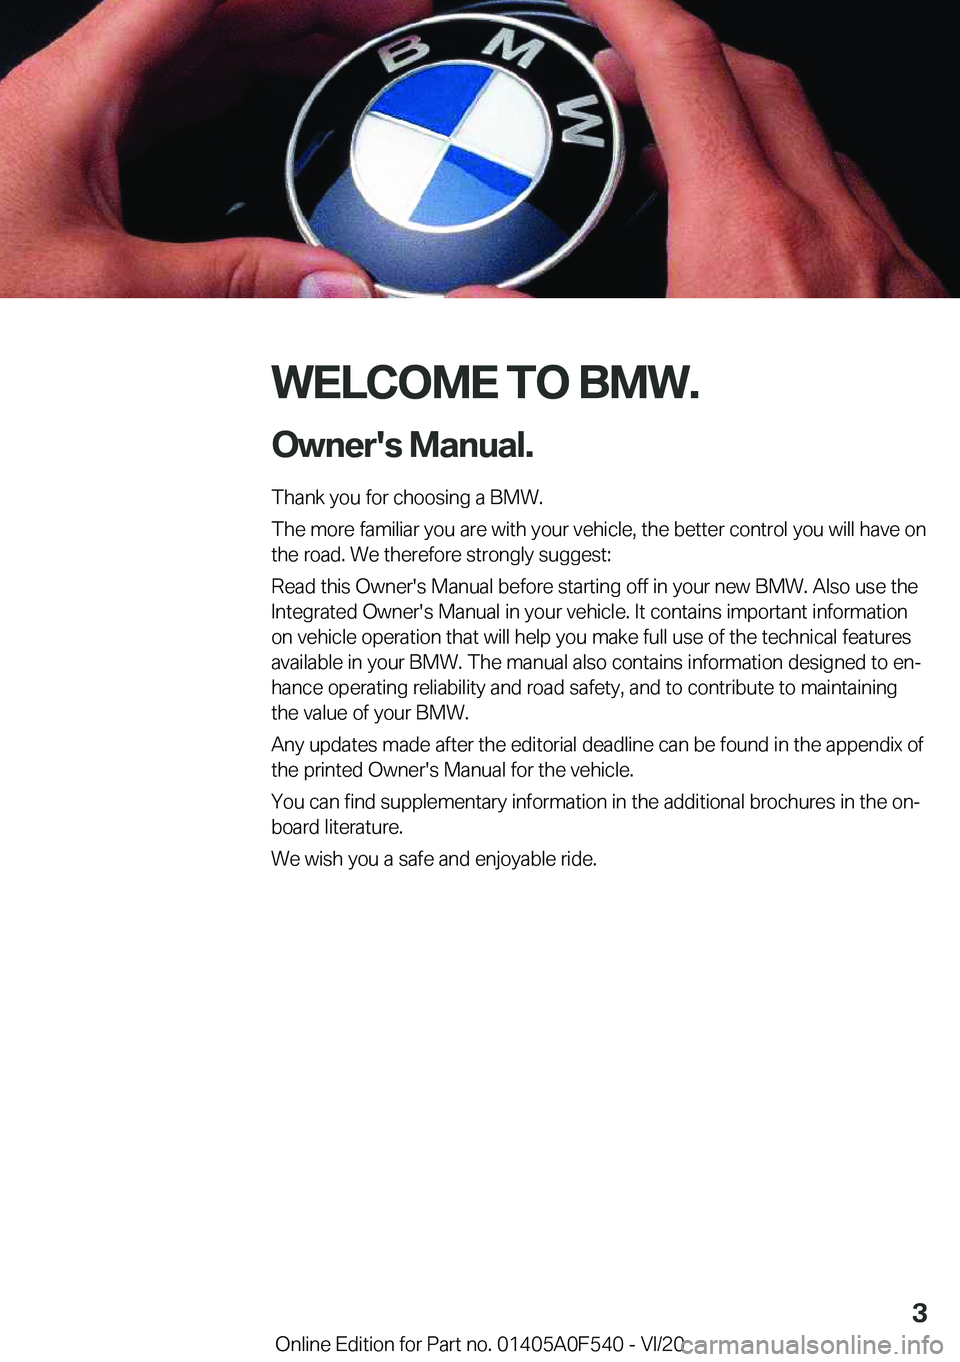 BMW X2 2021  Owners Manual �W�E�L�C�O�M�E��T�O��B�M�W�.�O�w�n�e�r�'�s��M�a�n�u�a�l�.
�T�h�a�n�k��y�o�u��f�o�r��c�h�o�o�s�i�n�g��a��B�M�W�.
�T�h�e��m�o�r�e��f�a�m�i�l�i�a�r��y�o�u��a�r�e��w�i�t�h��y�o�u�r��v�e